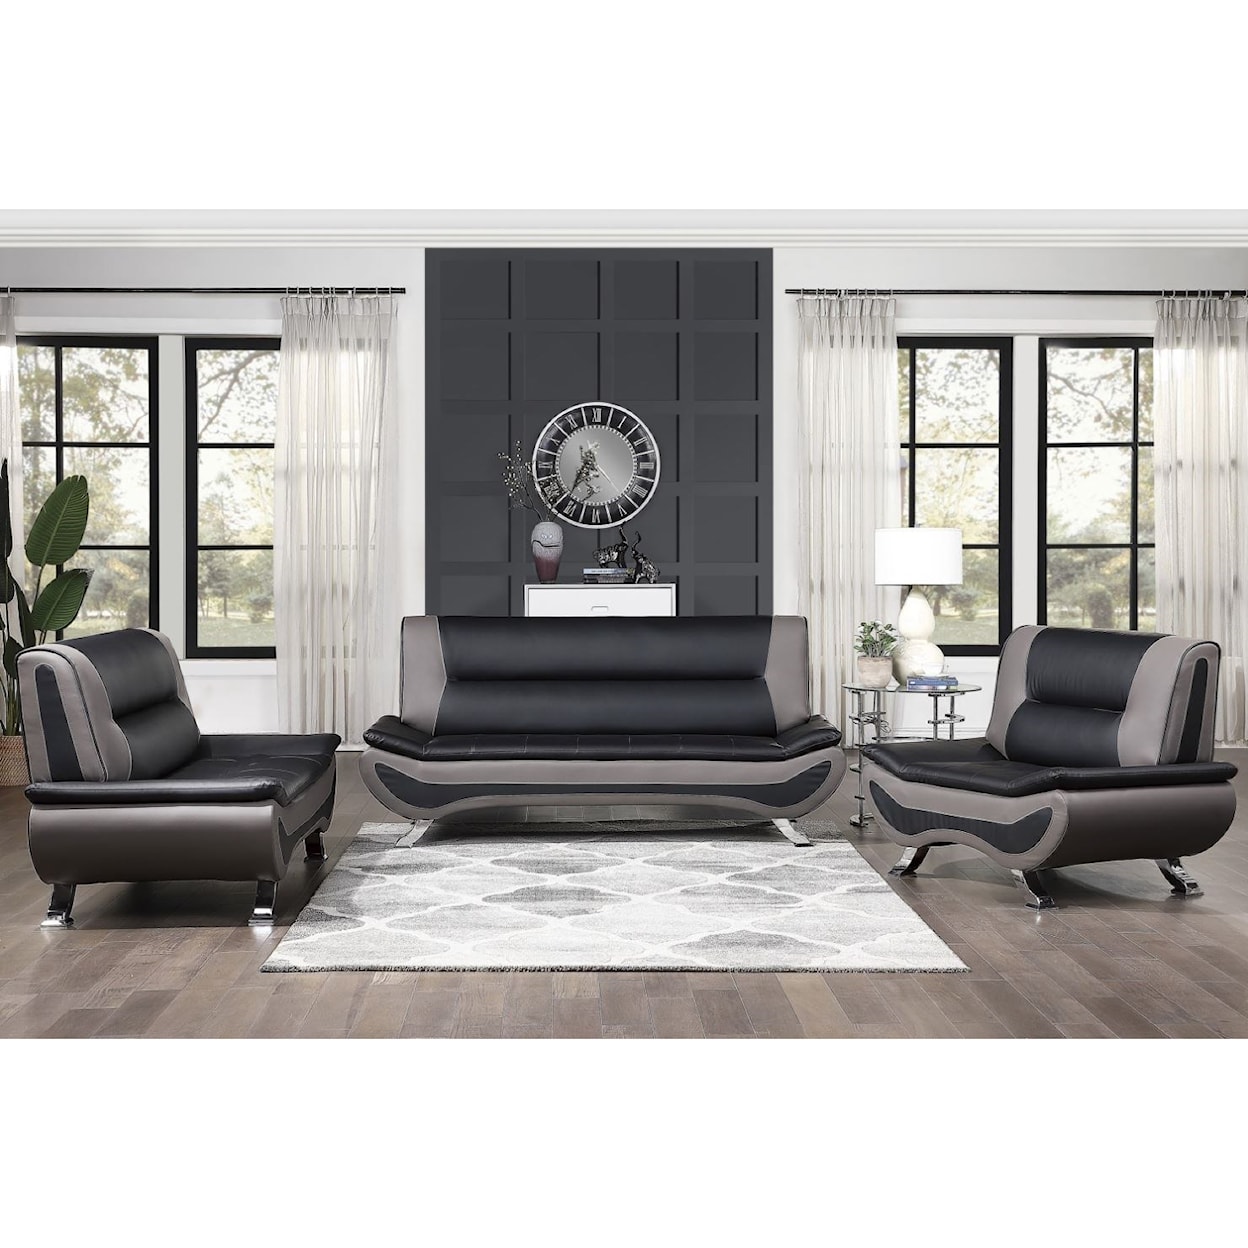 Homelegance Furniture Veloce Stationary Living Room Group